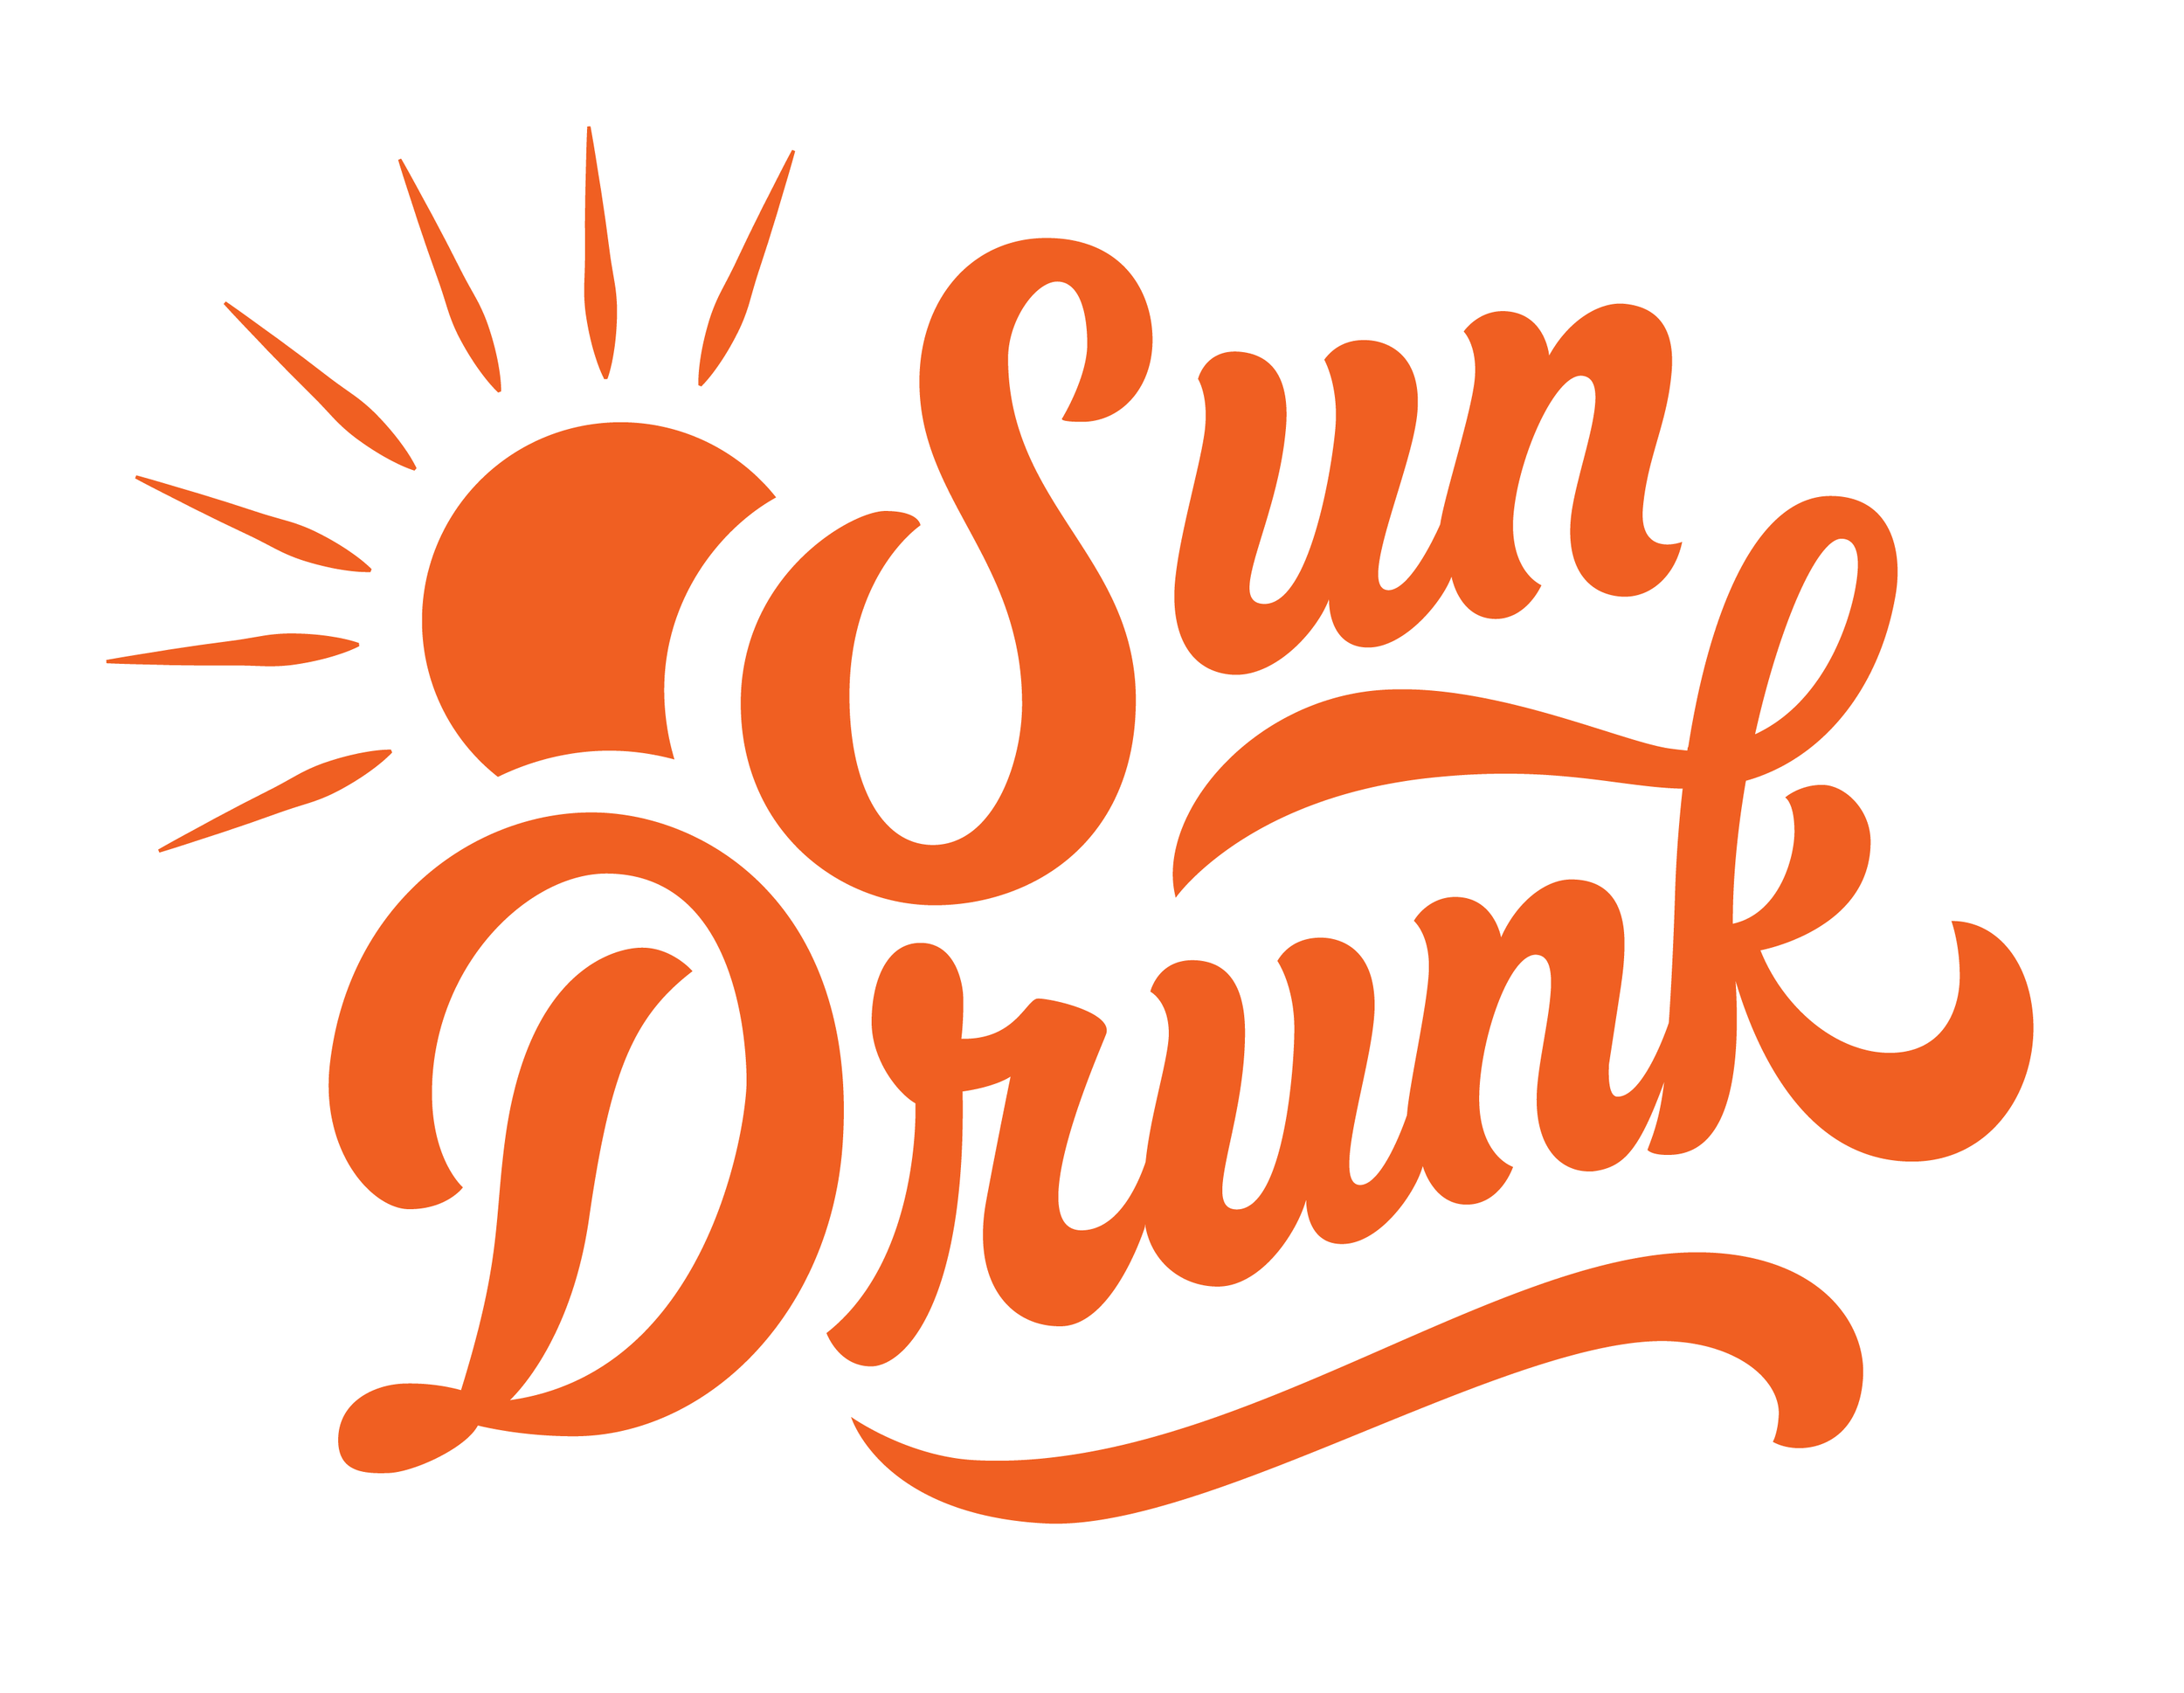 sun drunk_standard logo_orange.png